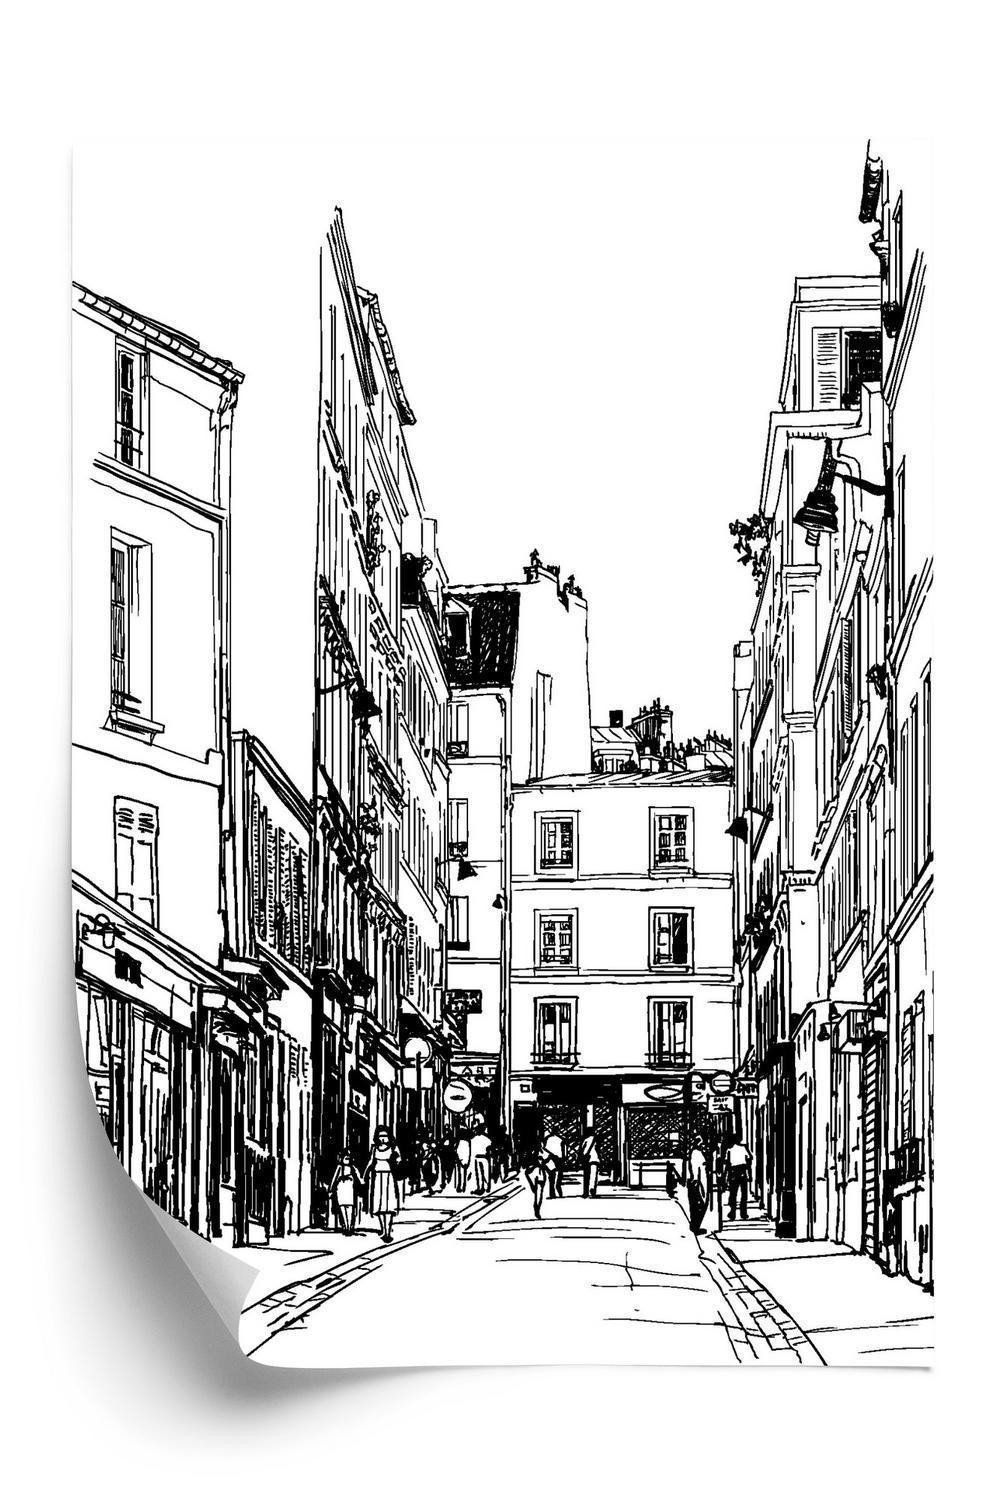 Plakat en gade nær montmartre i paris - Skitse